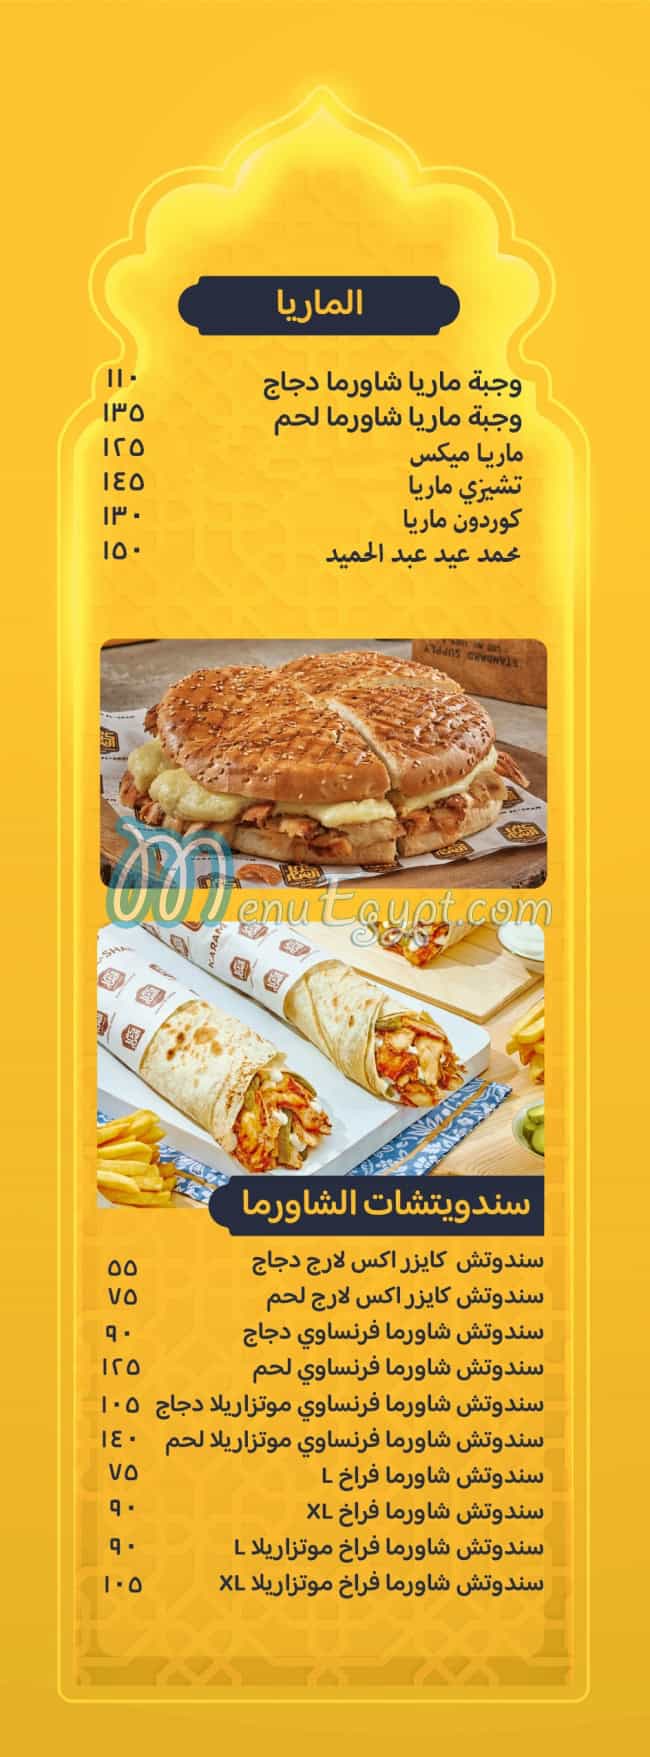 Karam El Sham delivery menu